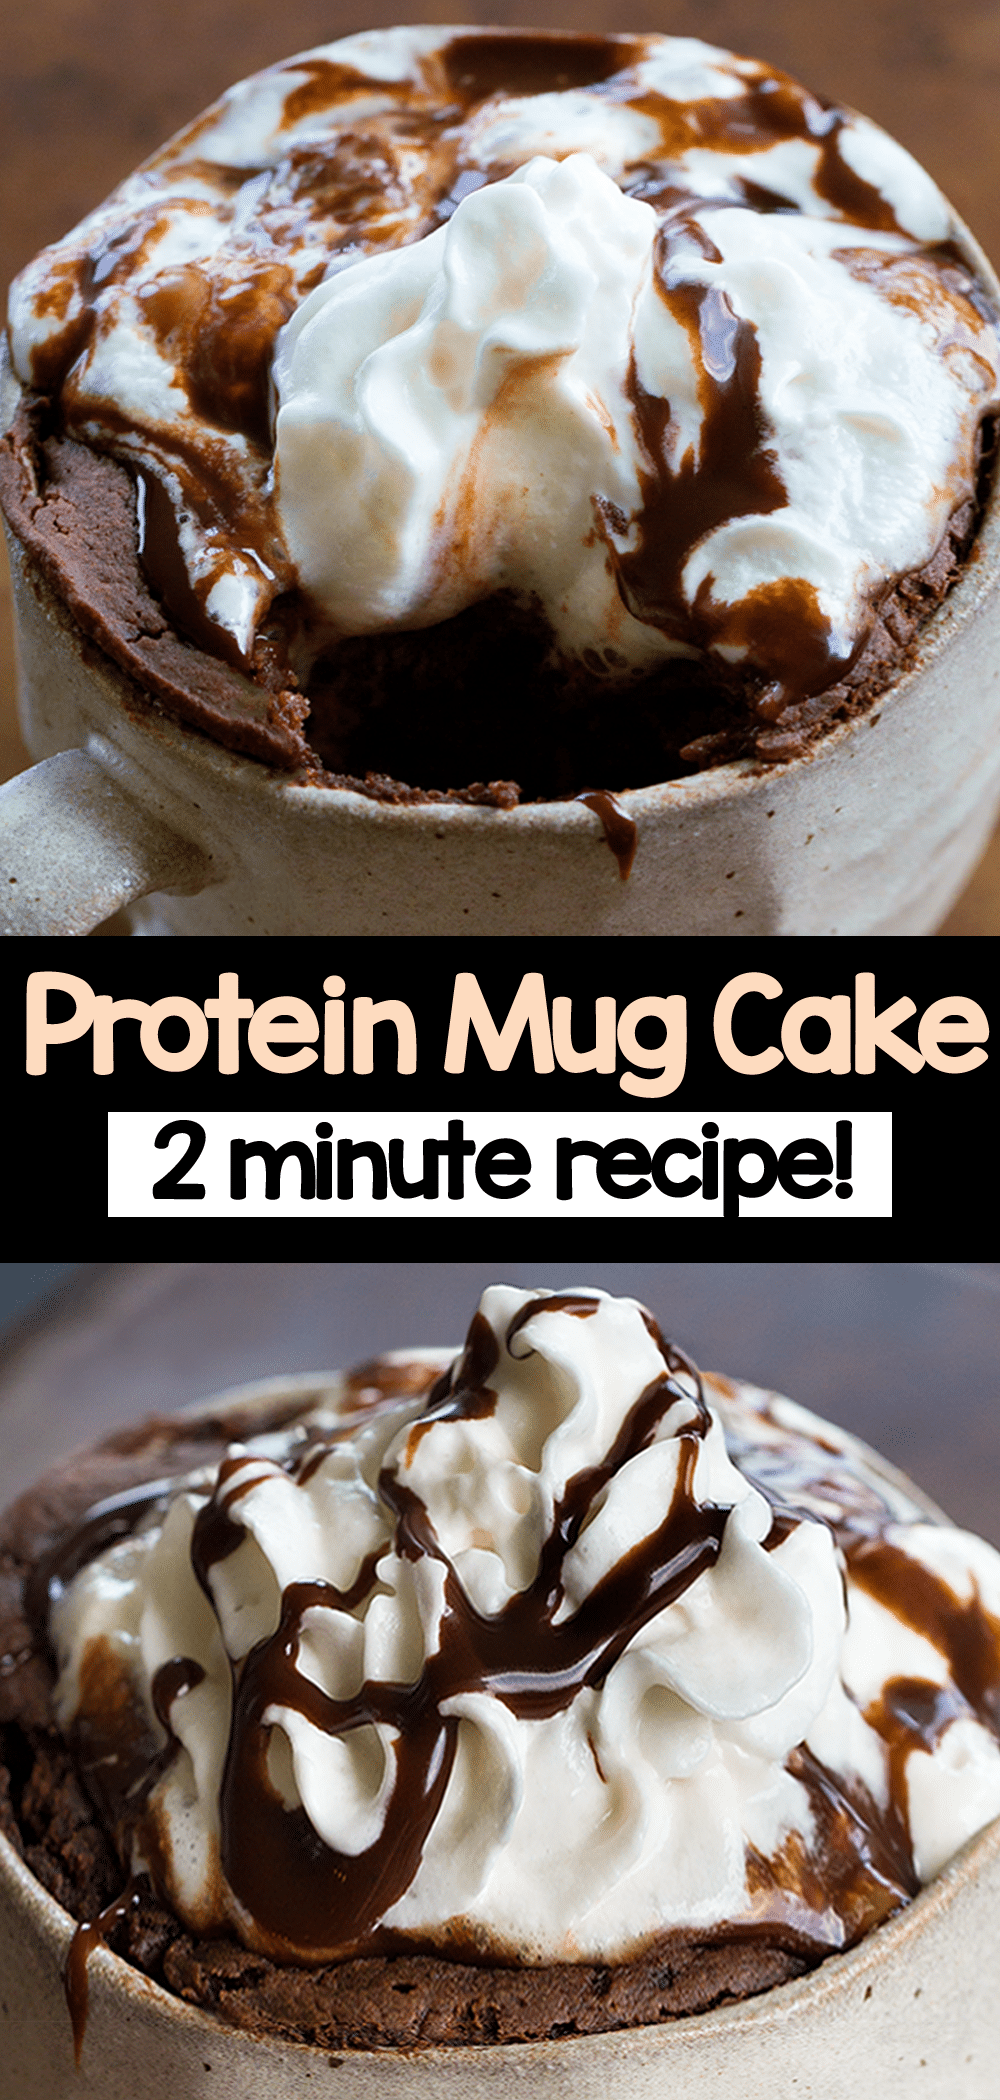 Chocolate Protein Cake in a Mug - Easy 2 Minute Recipe!